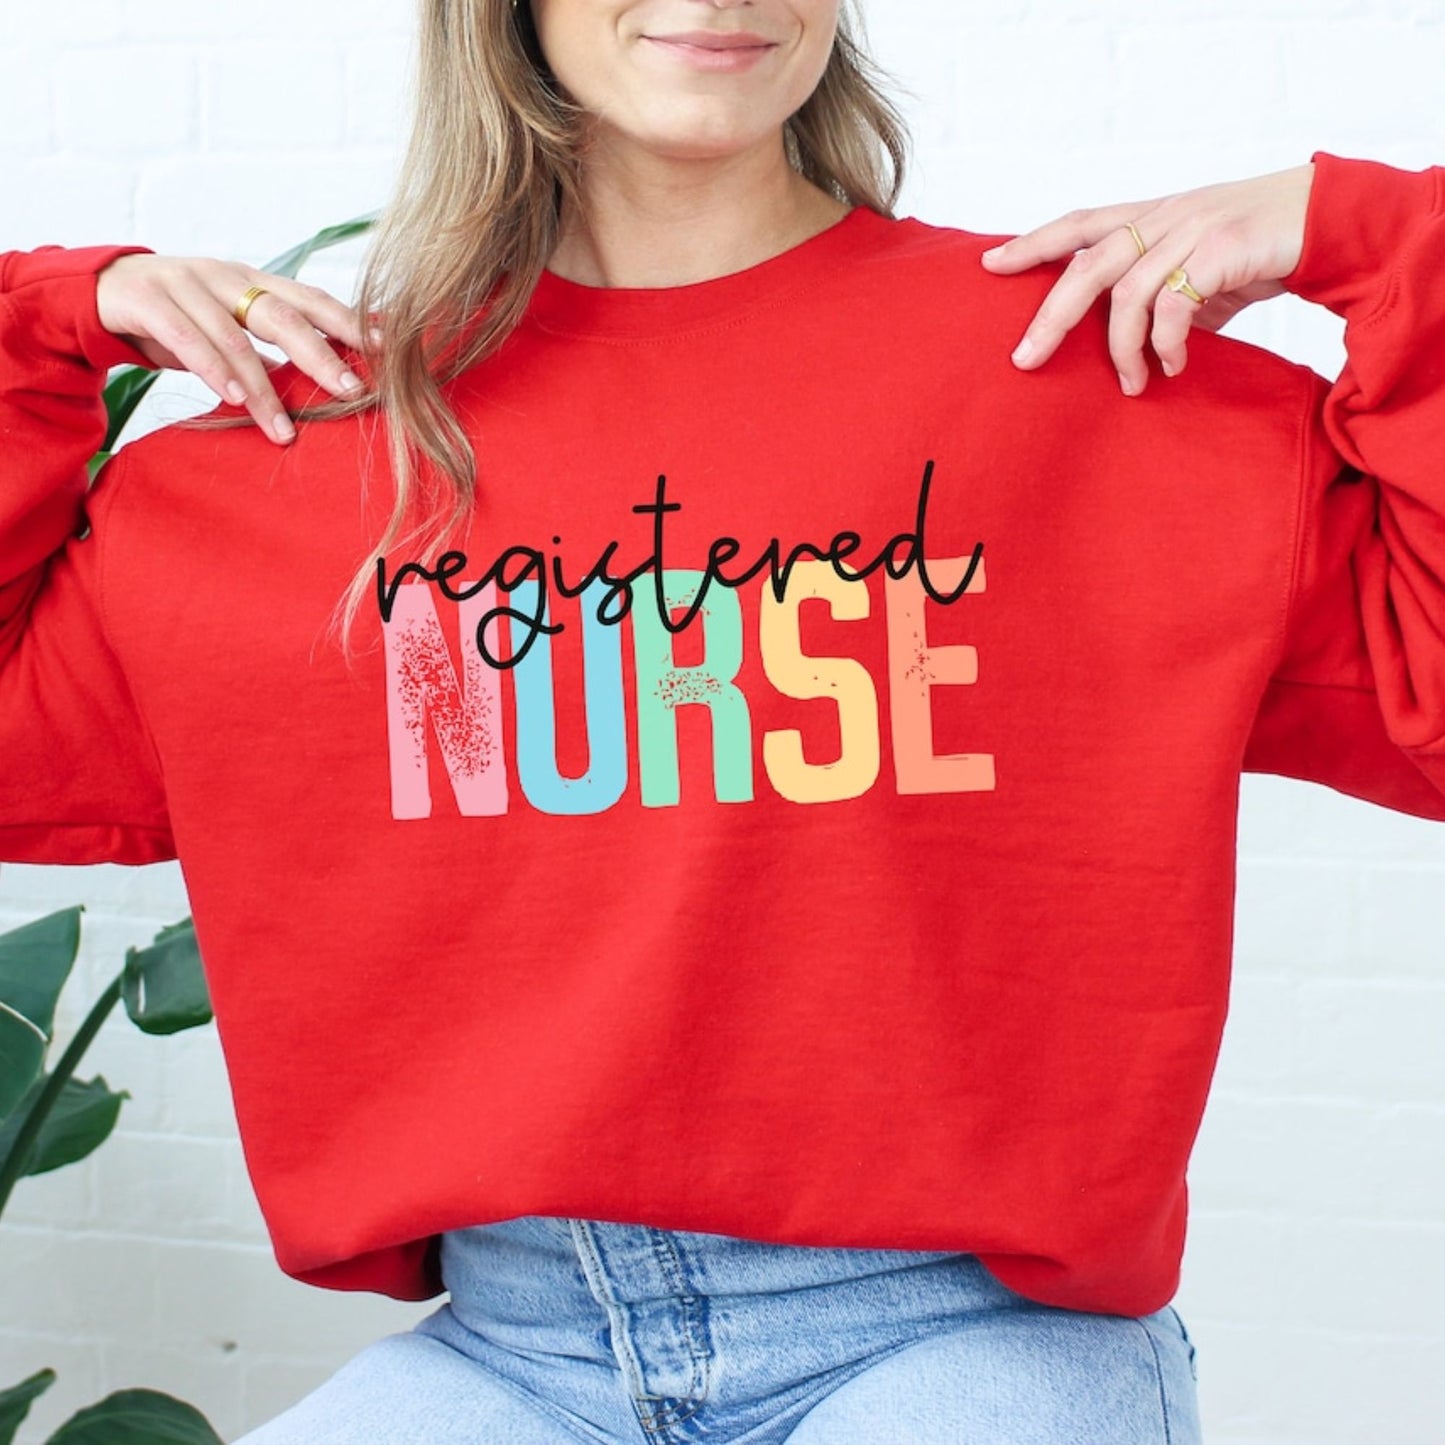 Registered Nurse Shirt - Gift for Registered Nurse